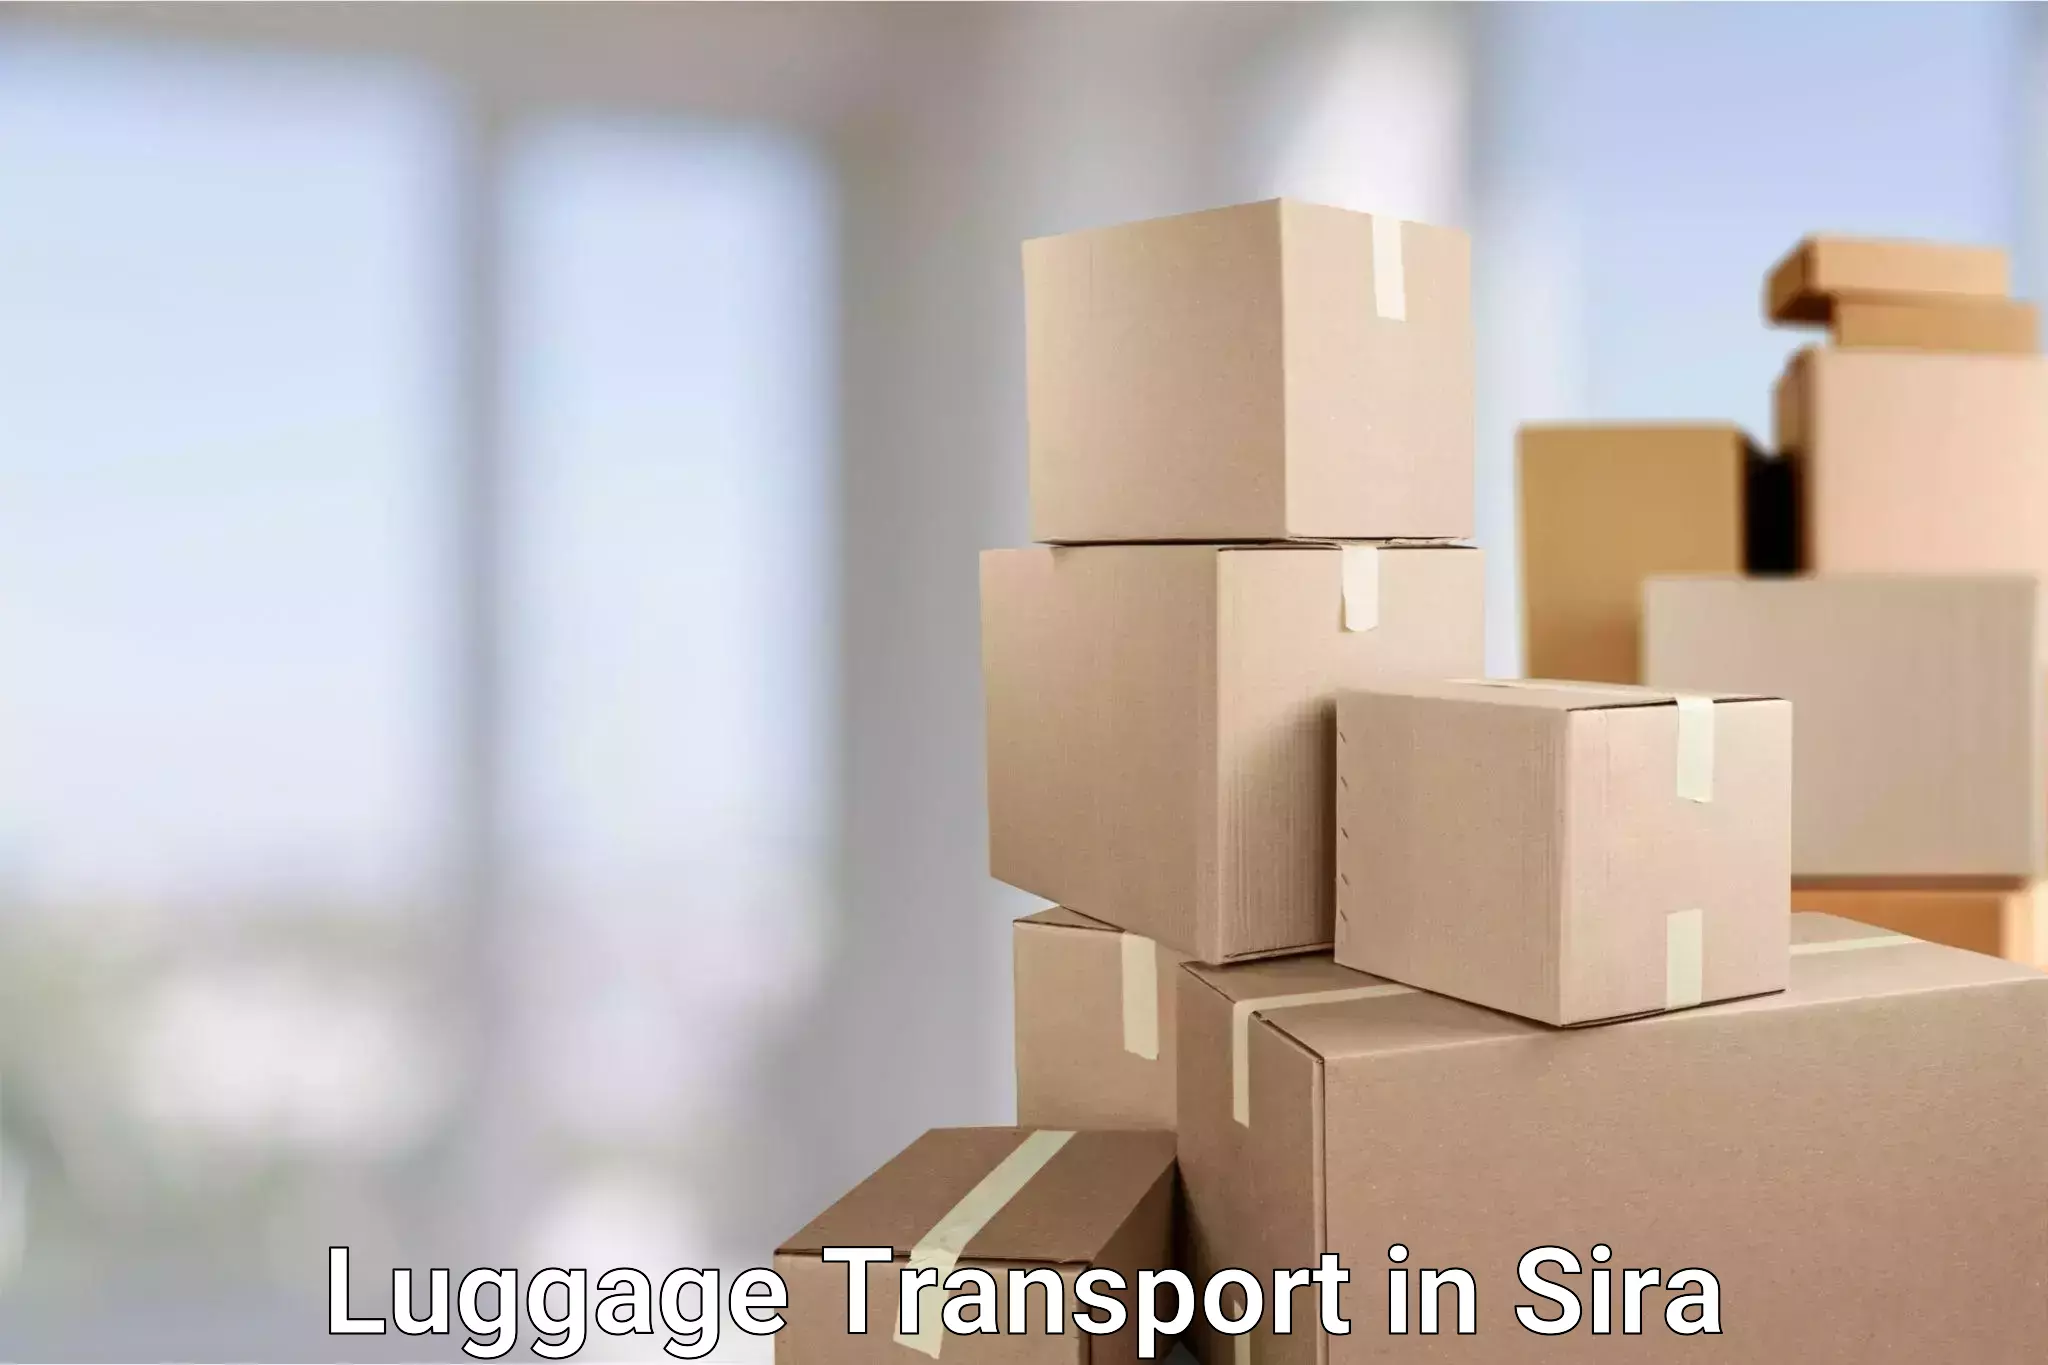 Luggage transit service in Sira